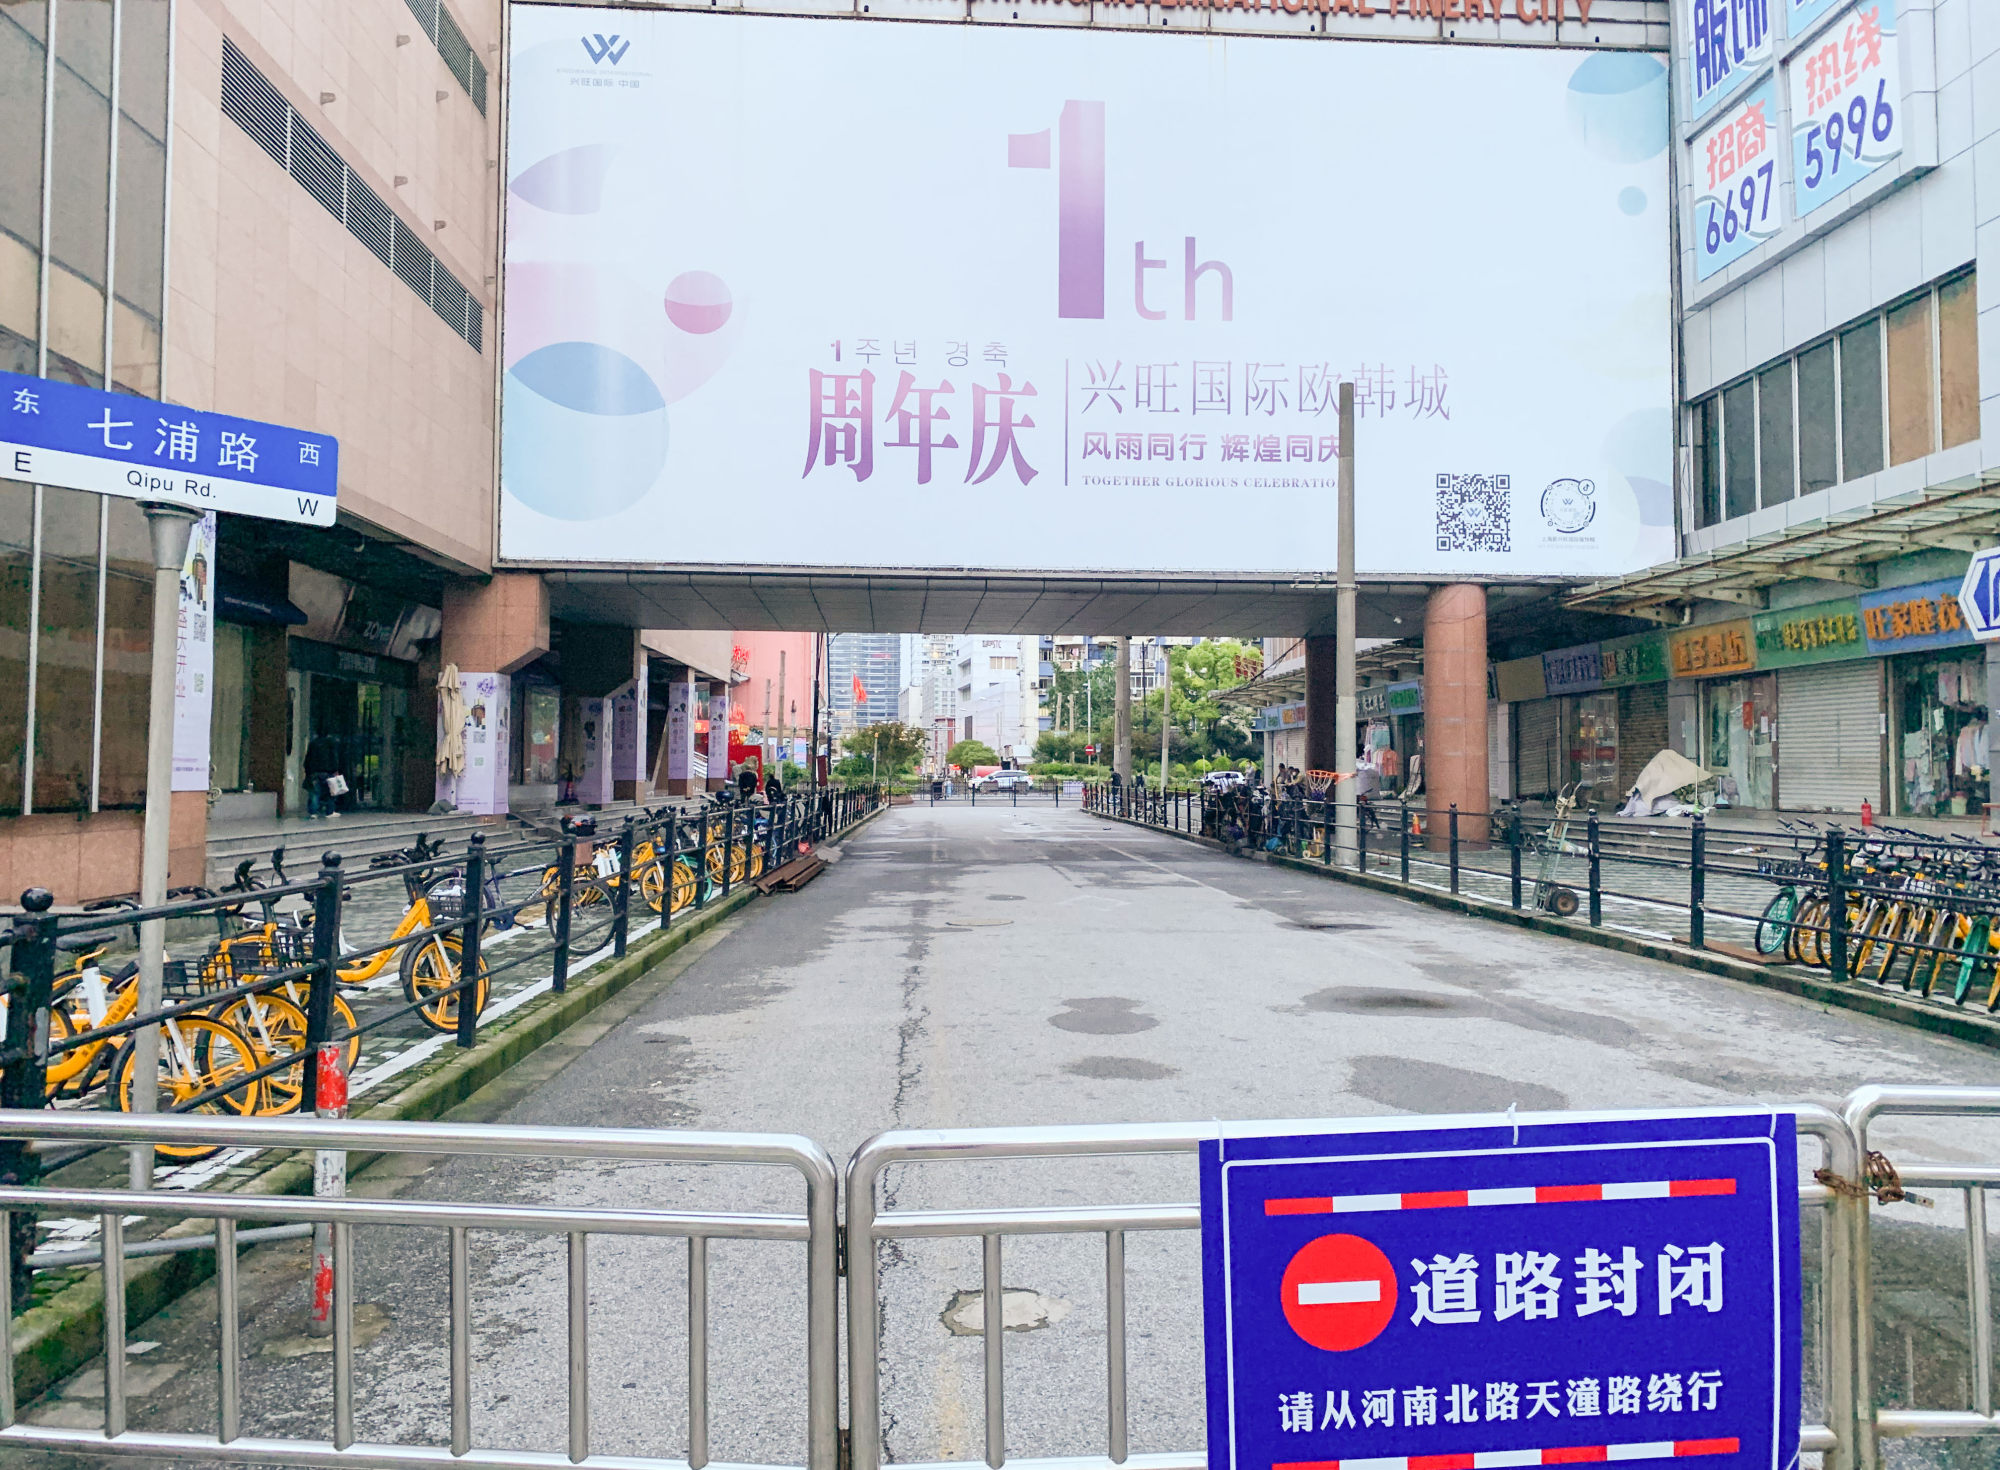 The Qipu Road Clothing Market in Shanghai remains shut on June 13, 2022. Photo: SCMP/ Daniel Ren